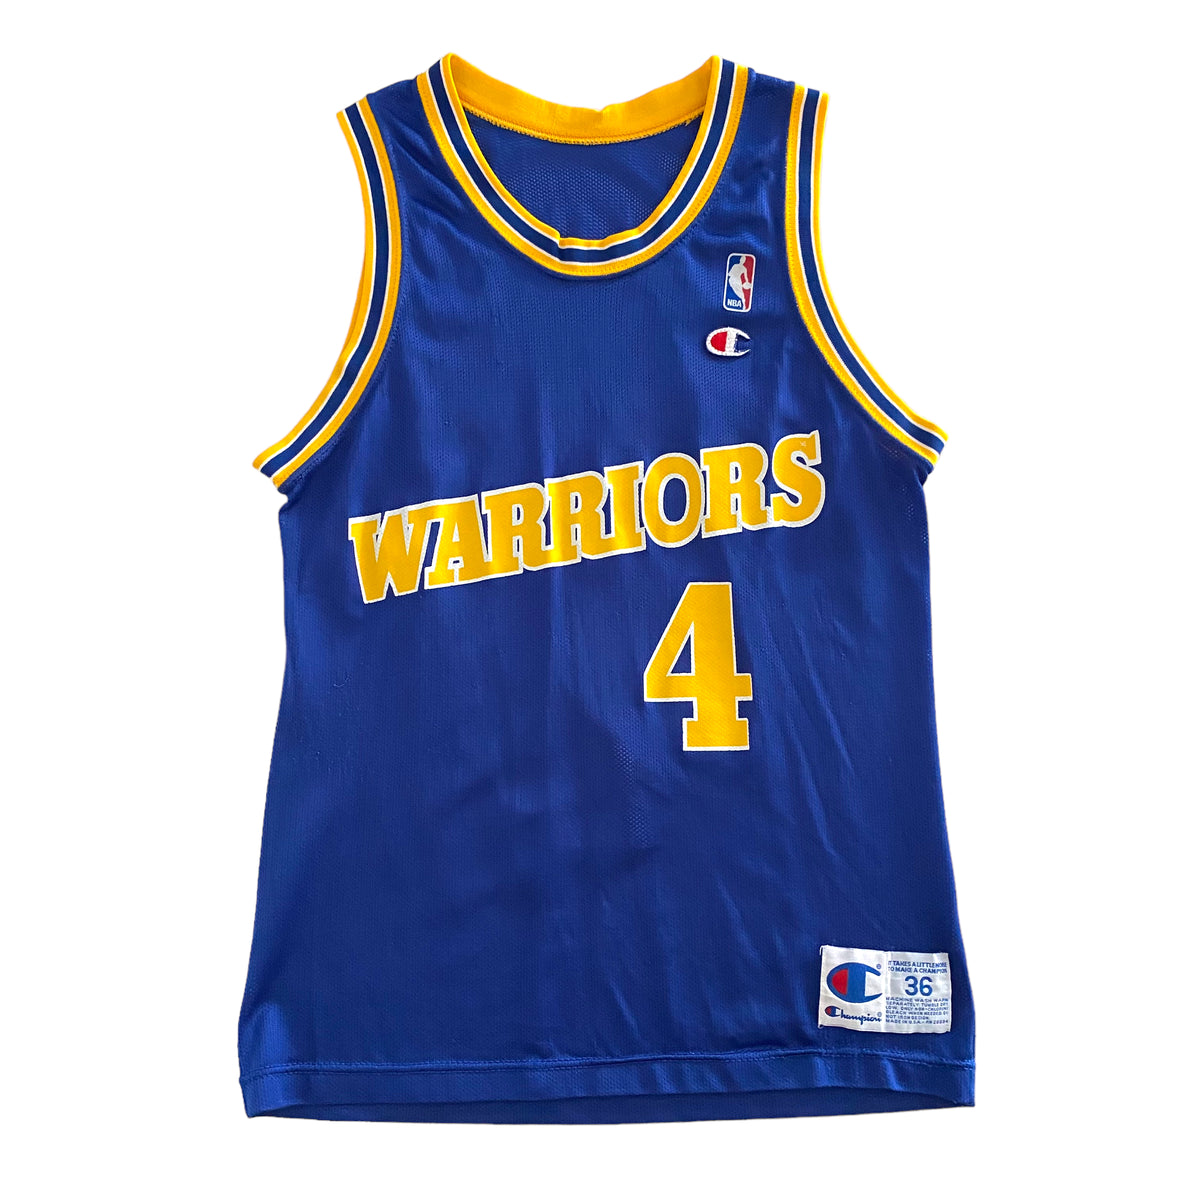 Golden State Warriors Vintage Mens NBA Jersey Chris Webber - Size 36